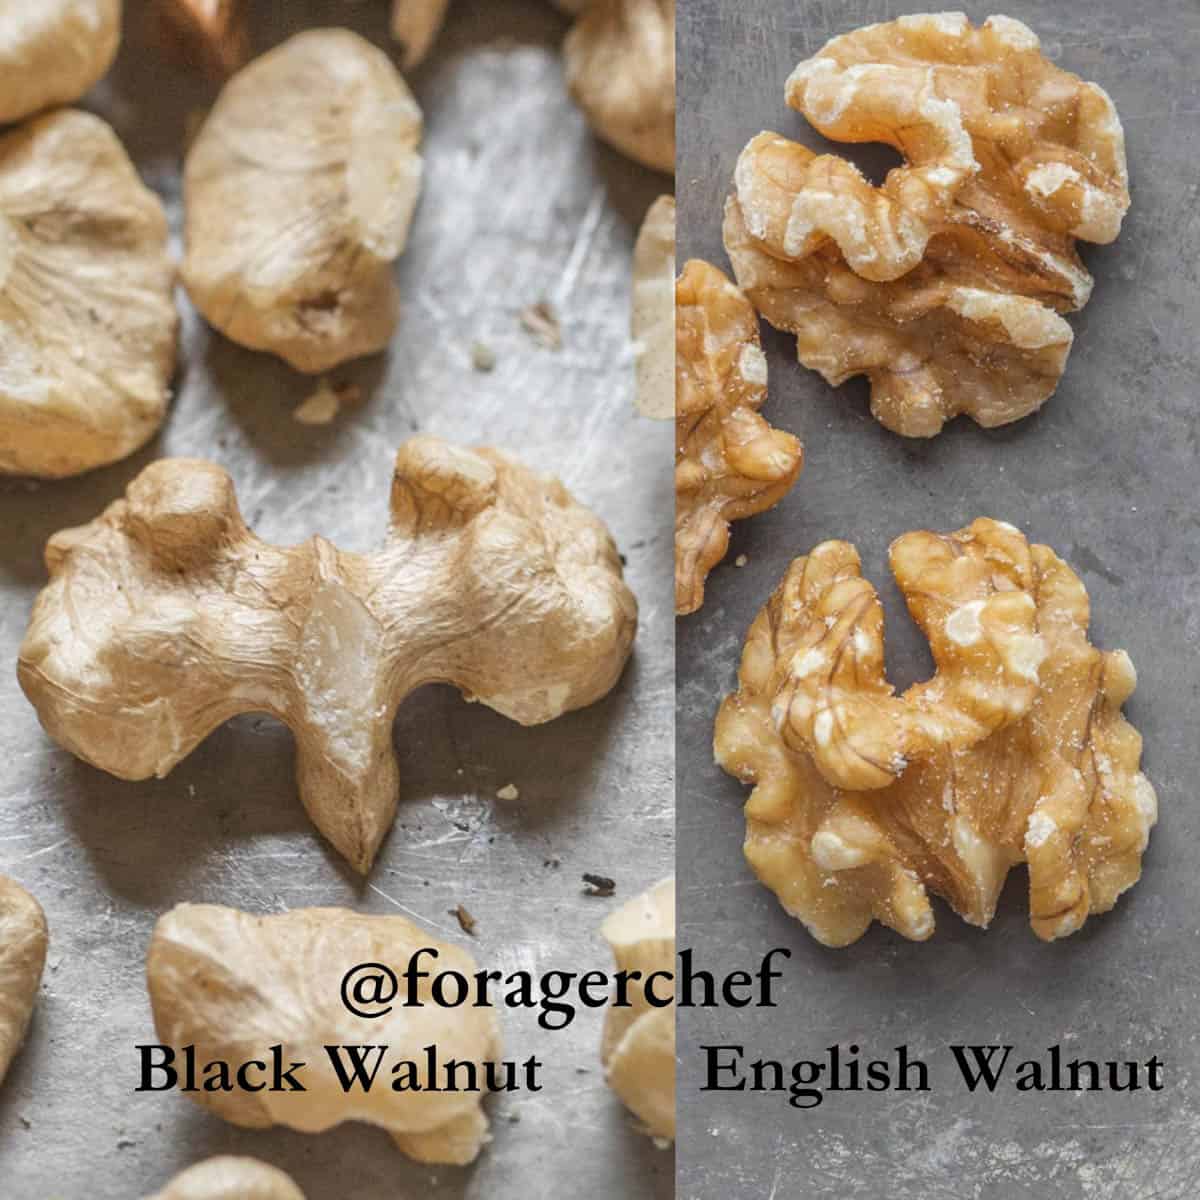 a picture comparing black walnuts vs English walnuts